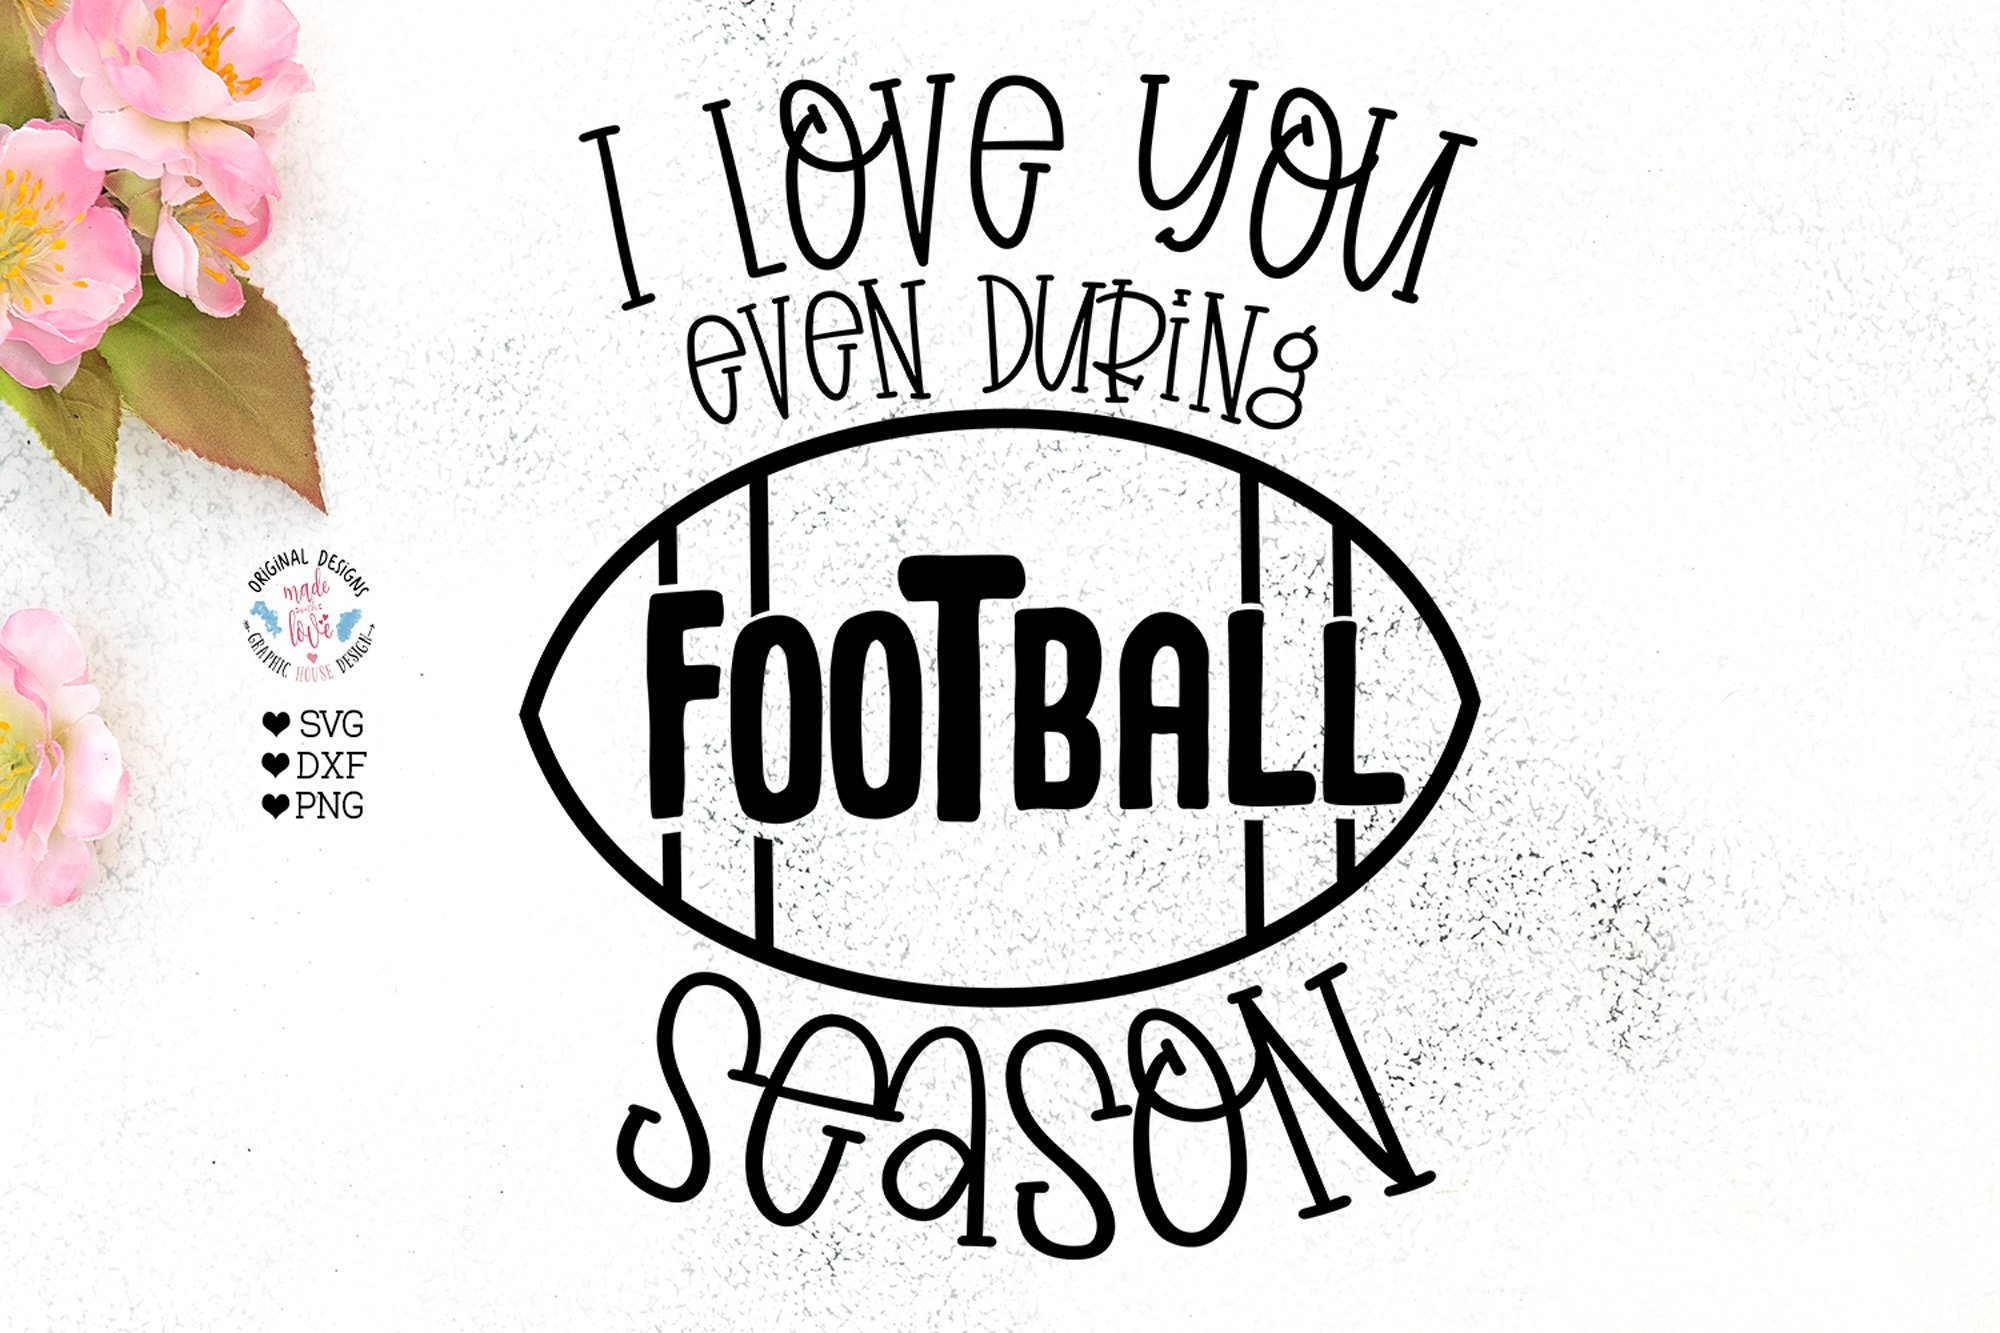 I love you even football season cover image.